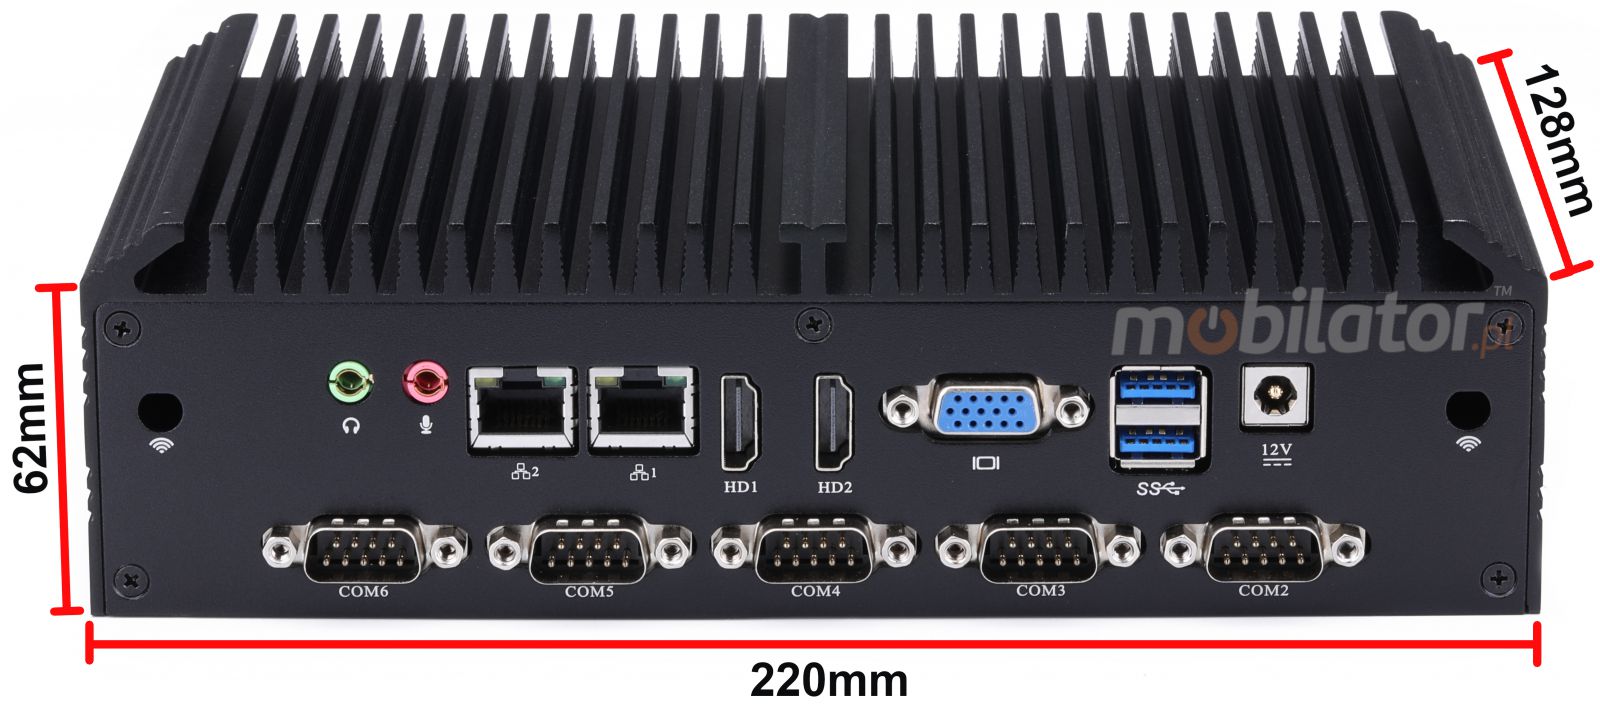 mBox X105 v.2 - Industrial Mini Computer with Intel Celeron 3855U Processor - M.2 disk - USB 3.0, 2x HDMI and WiFi - Dimensions